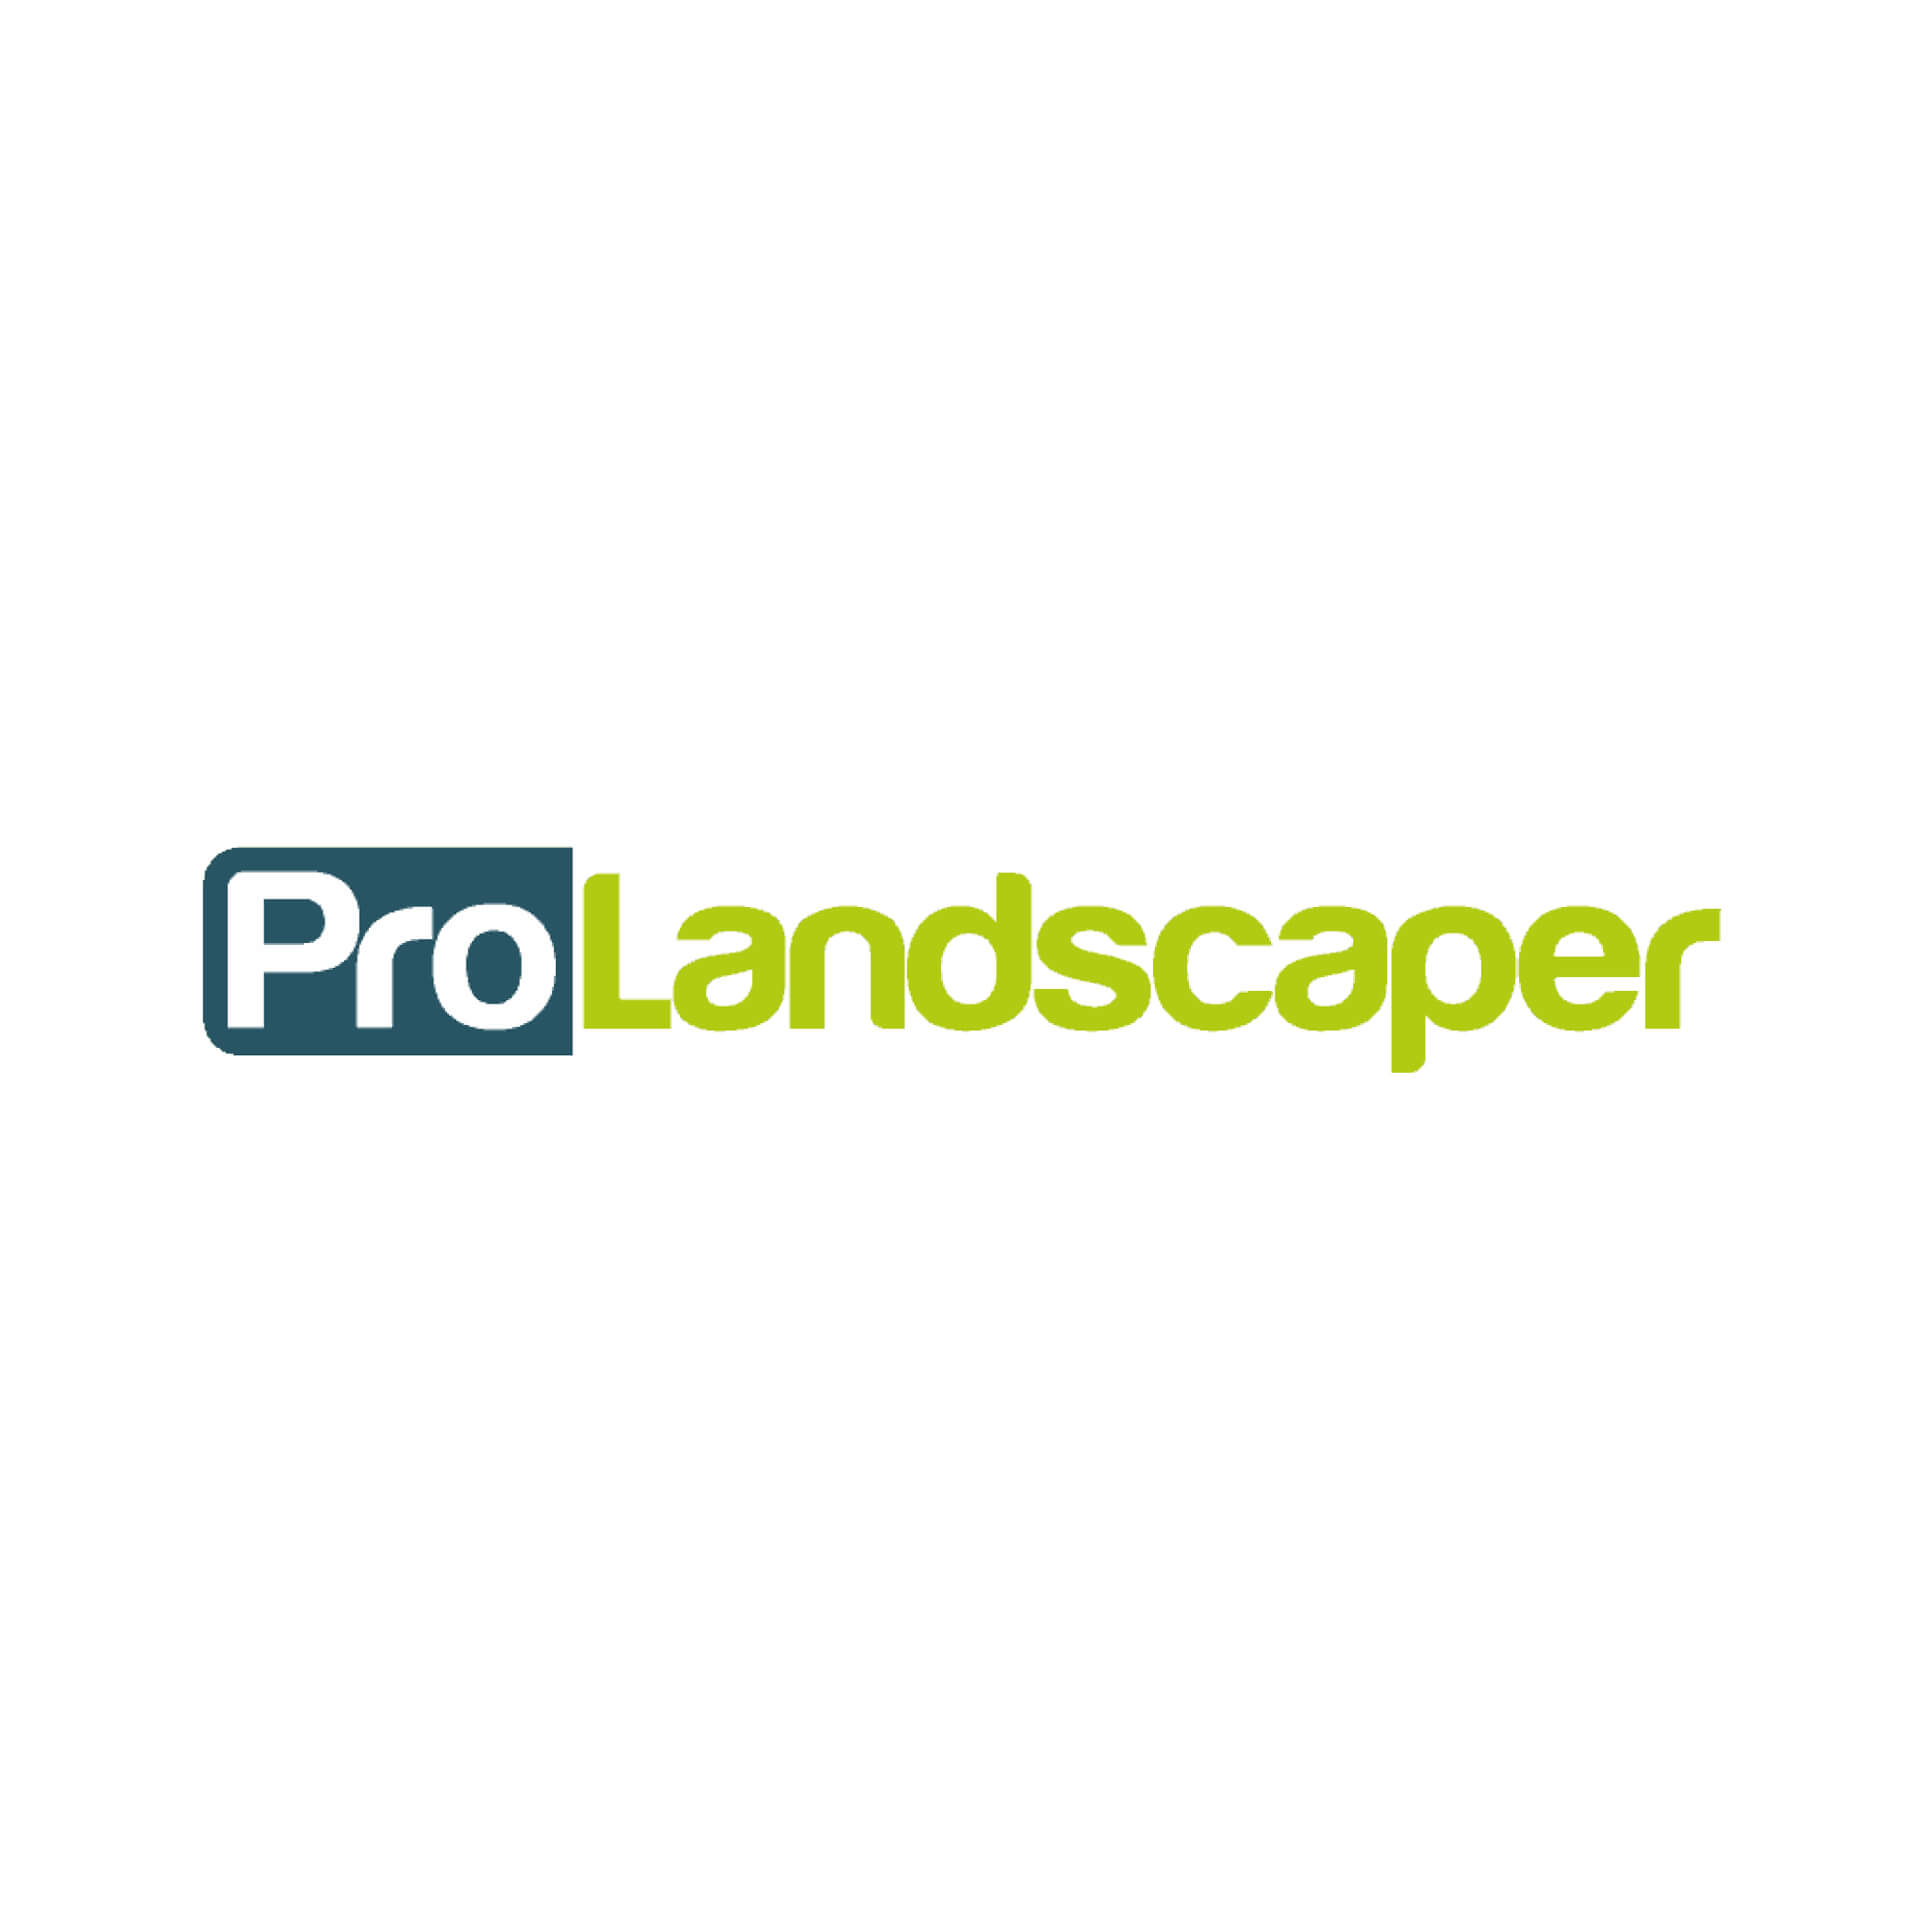 Pro Landscaper